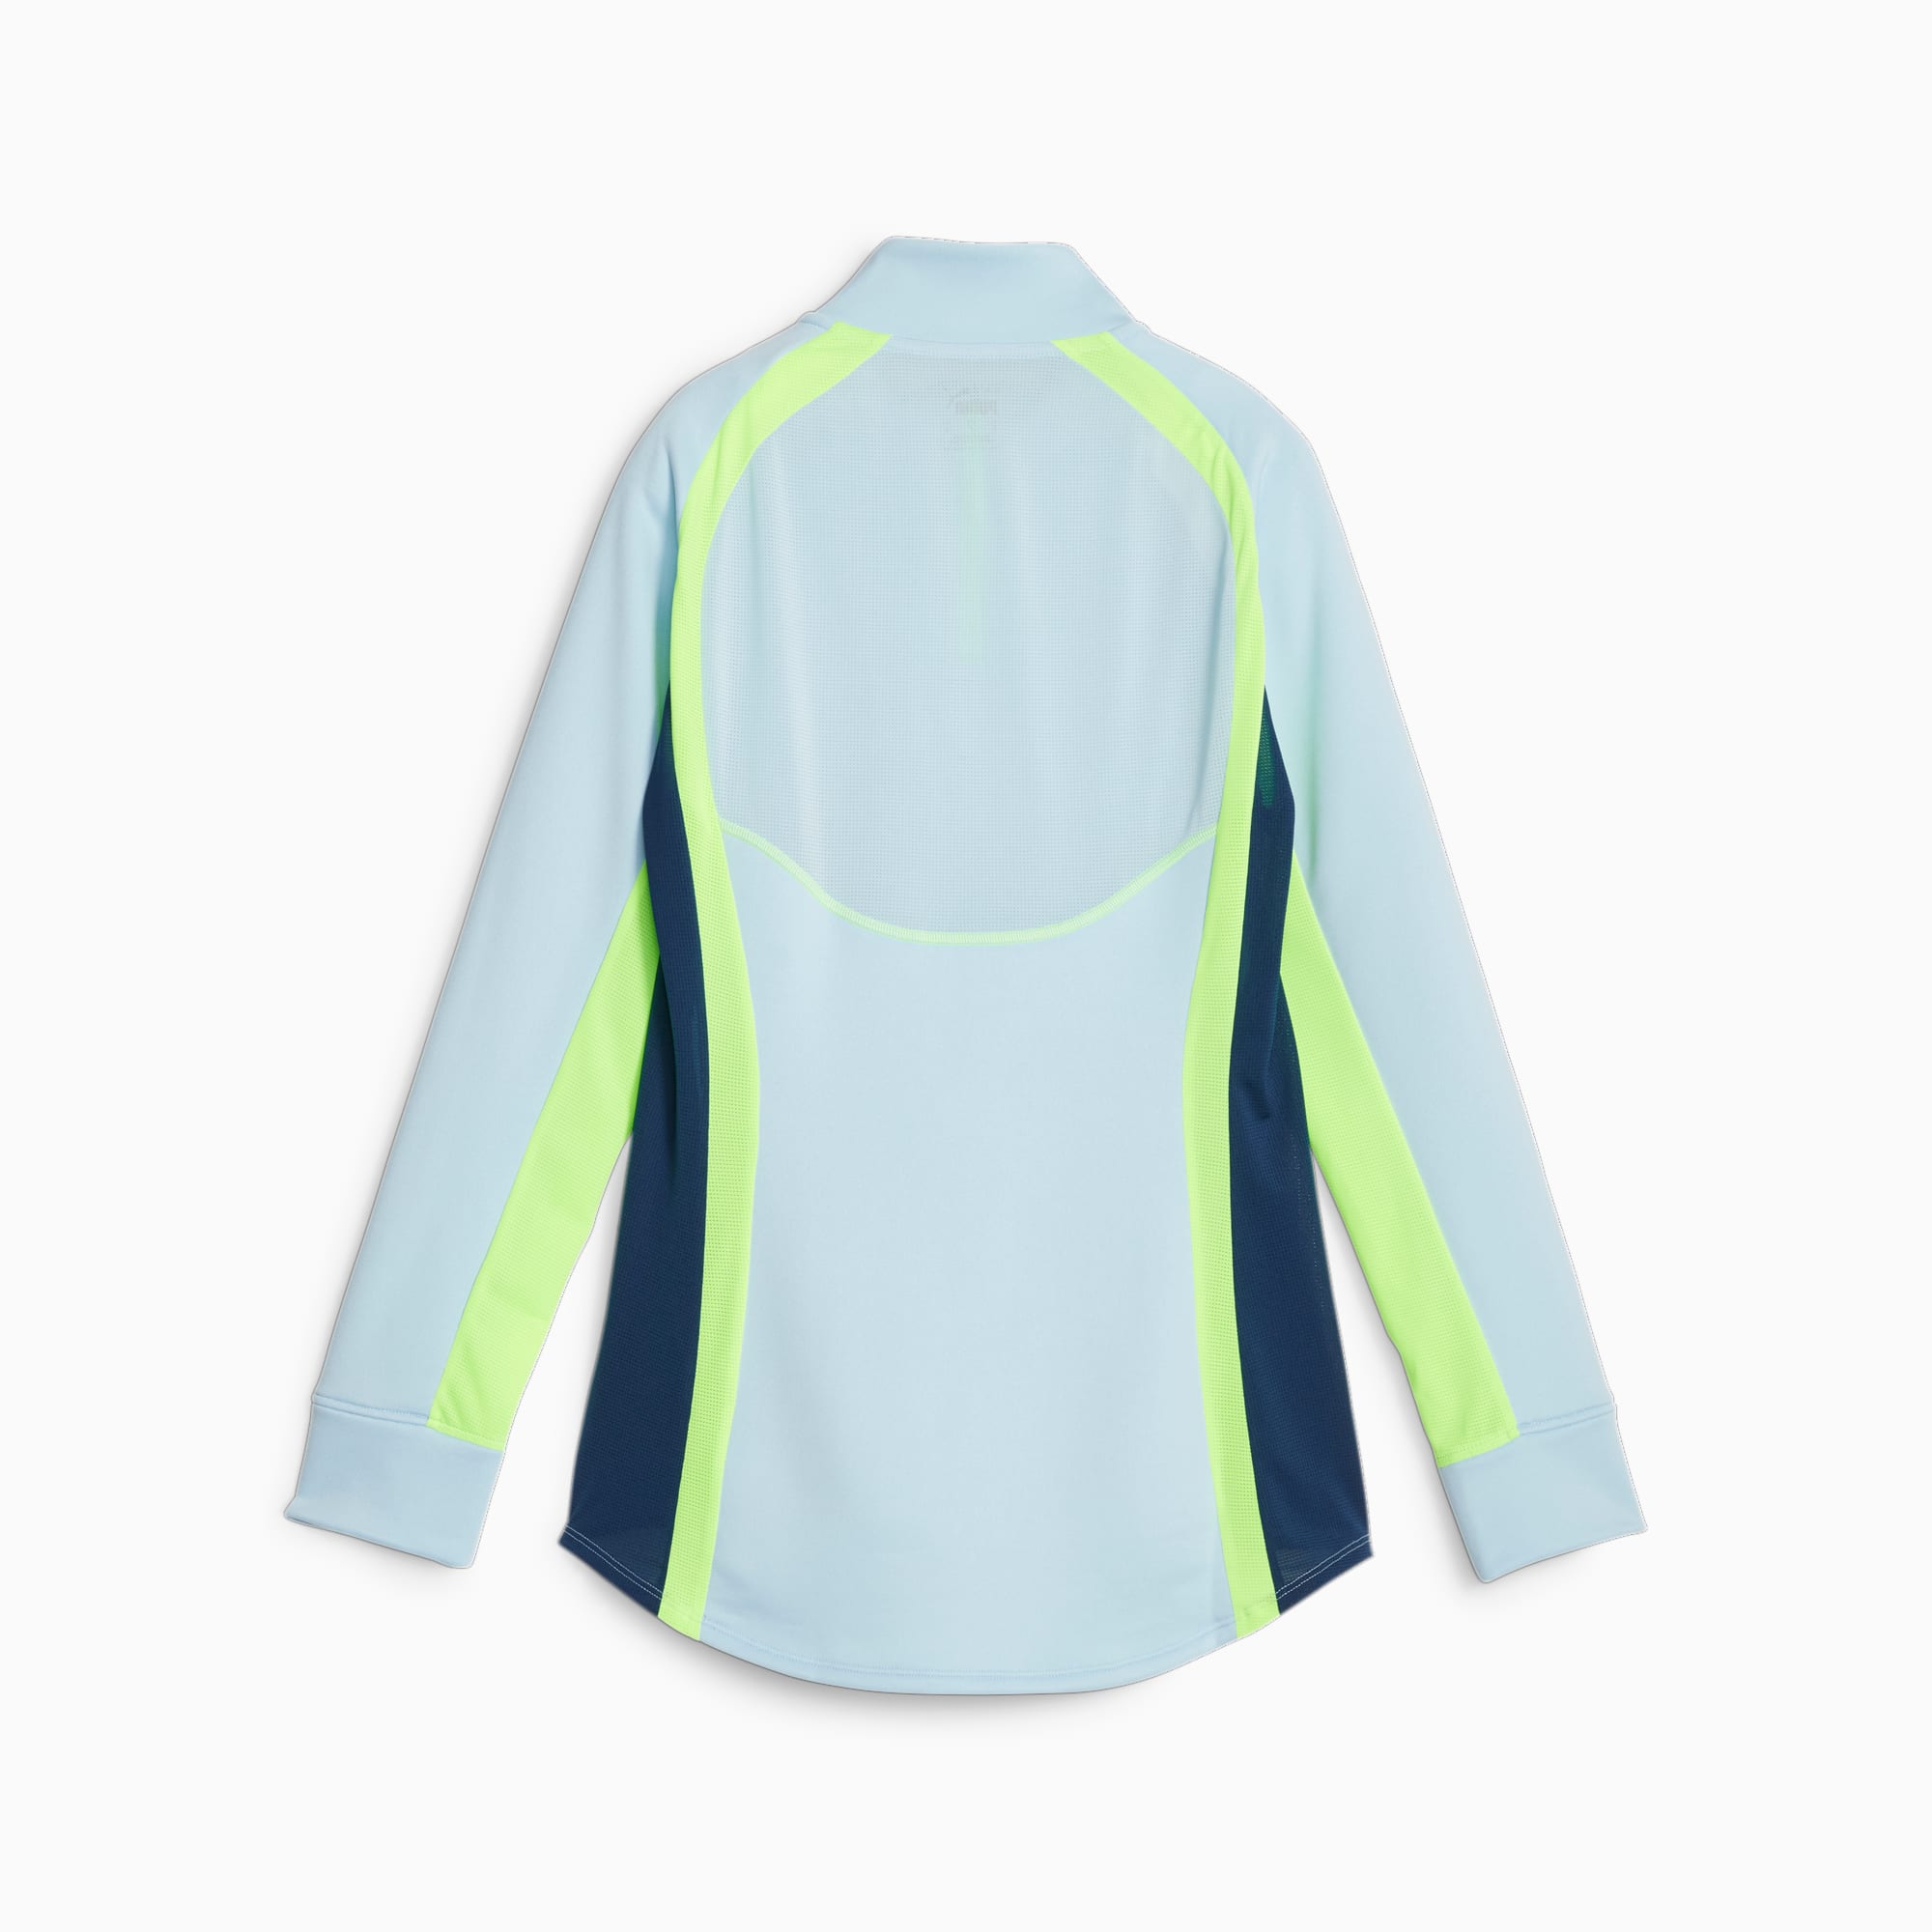 PUMA Individualblaze Women's Quarter-Zip Football Top Shirt, Silver Sky/Persian Blue, Size XS, Clothing